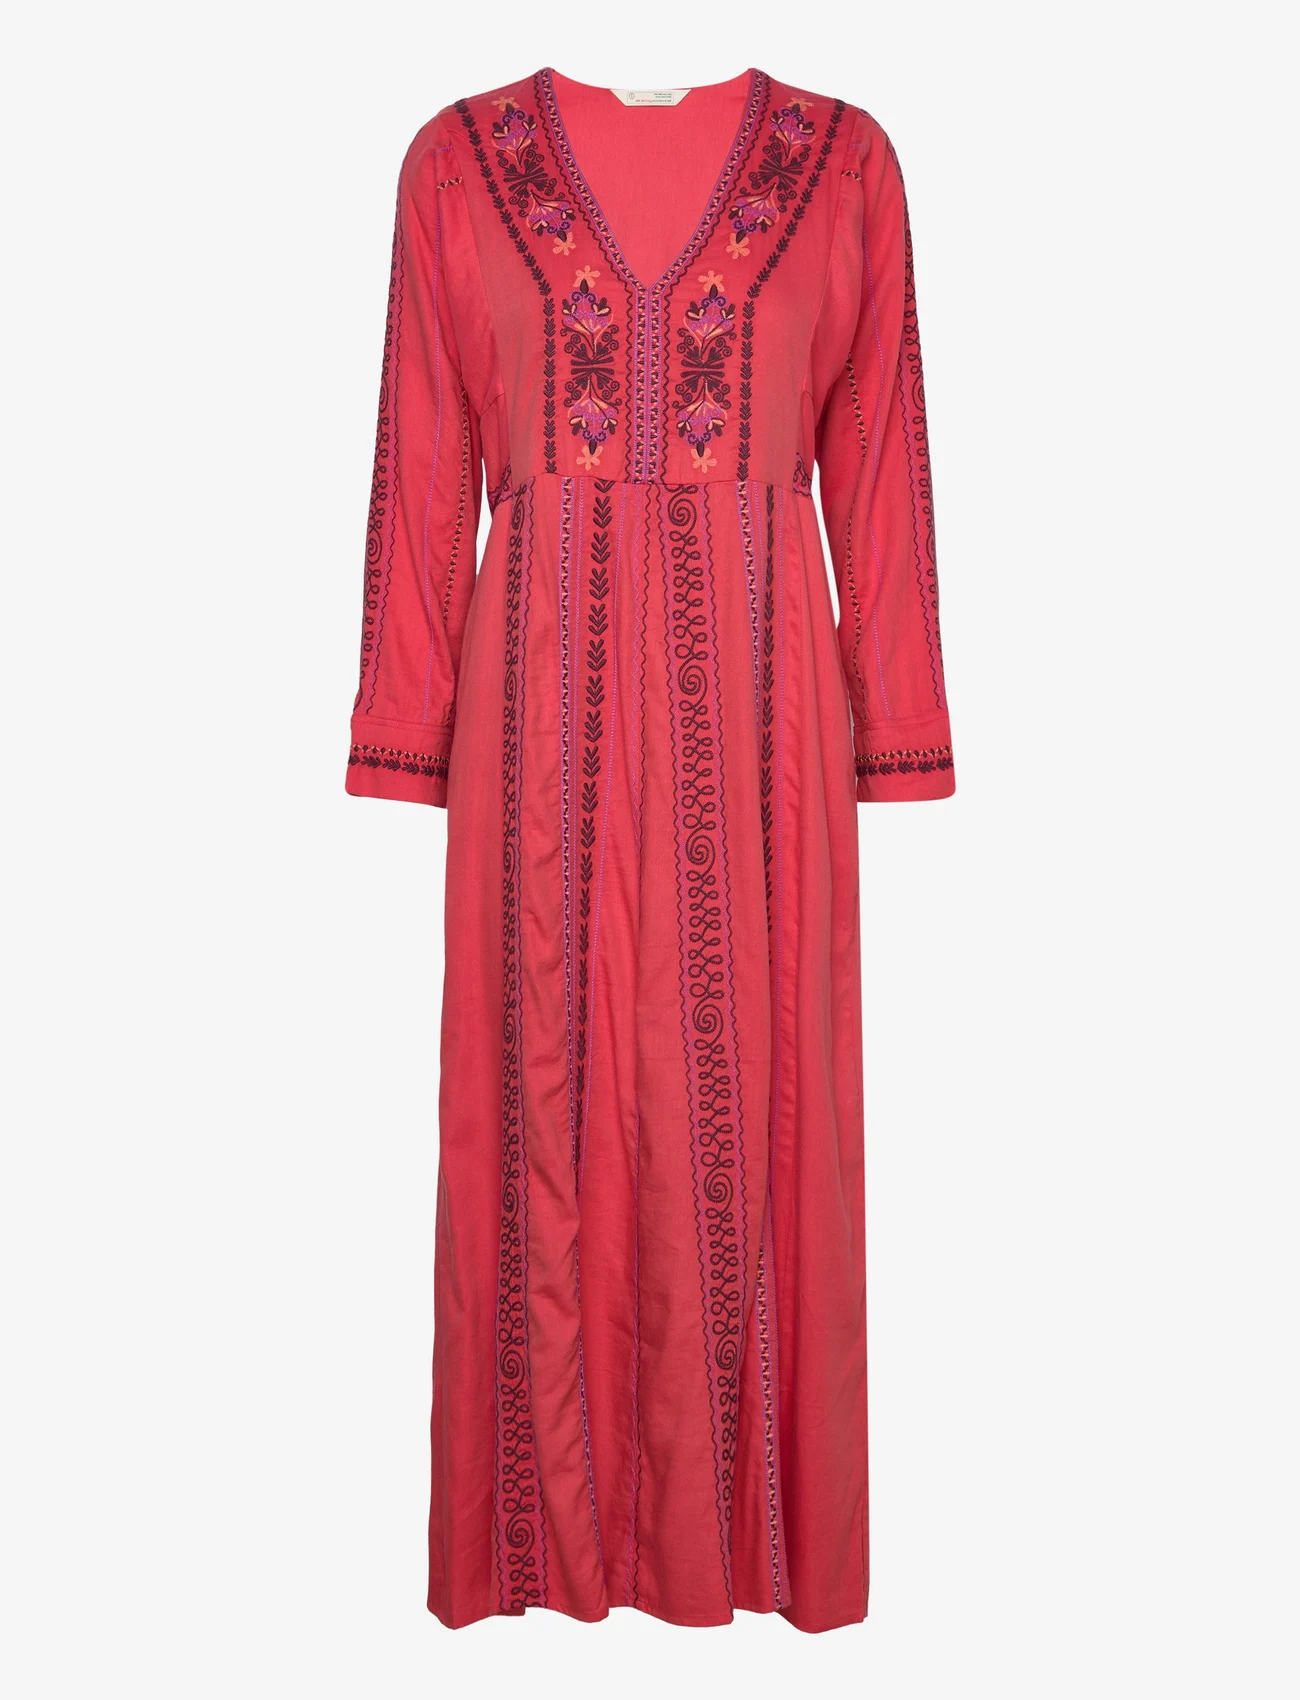 ODD MOLLY - Tara Dress - maxi dresses - dreamy red - 0